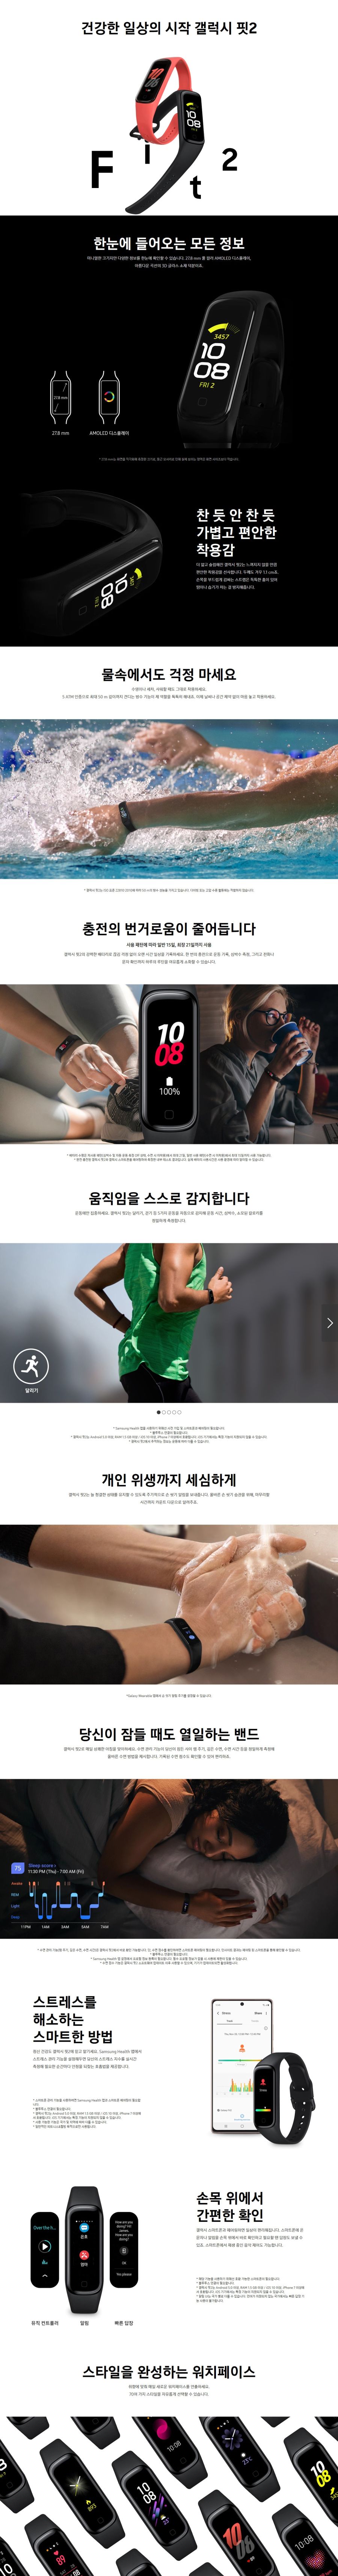 Screenshot_2020-09-30 갤럭시 핏2 (스칼렛) Samsung 대한민국(1).jpg